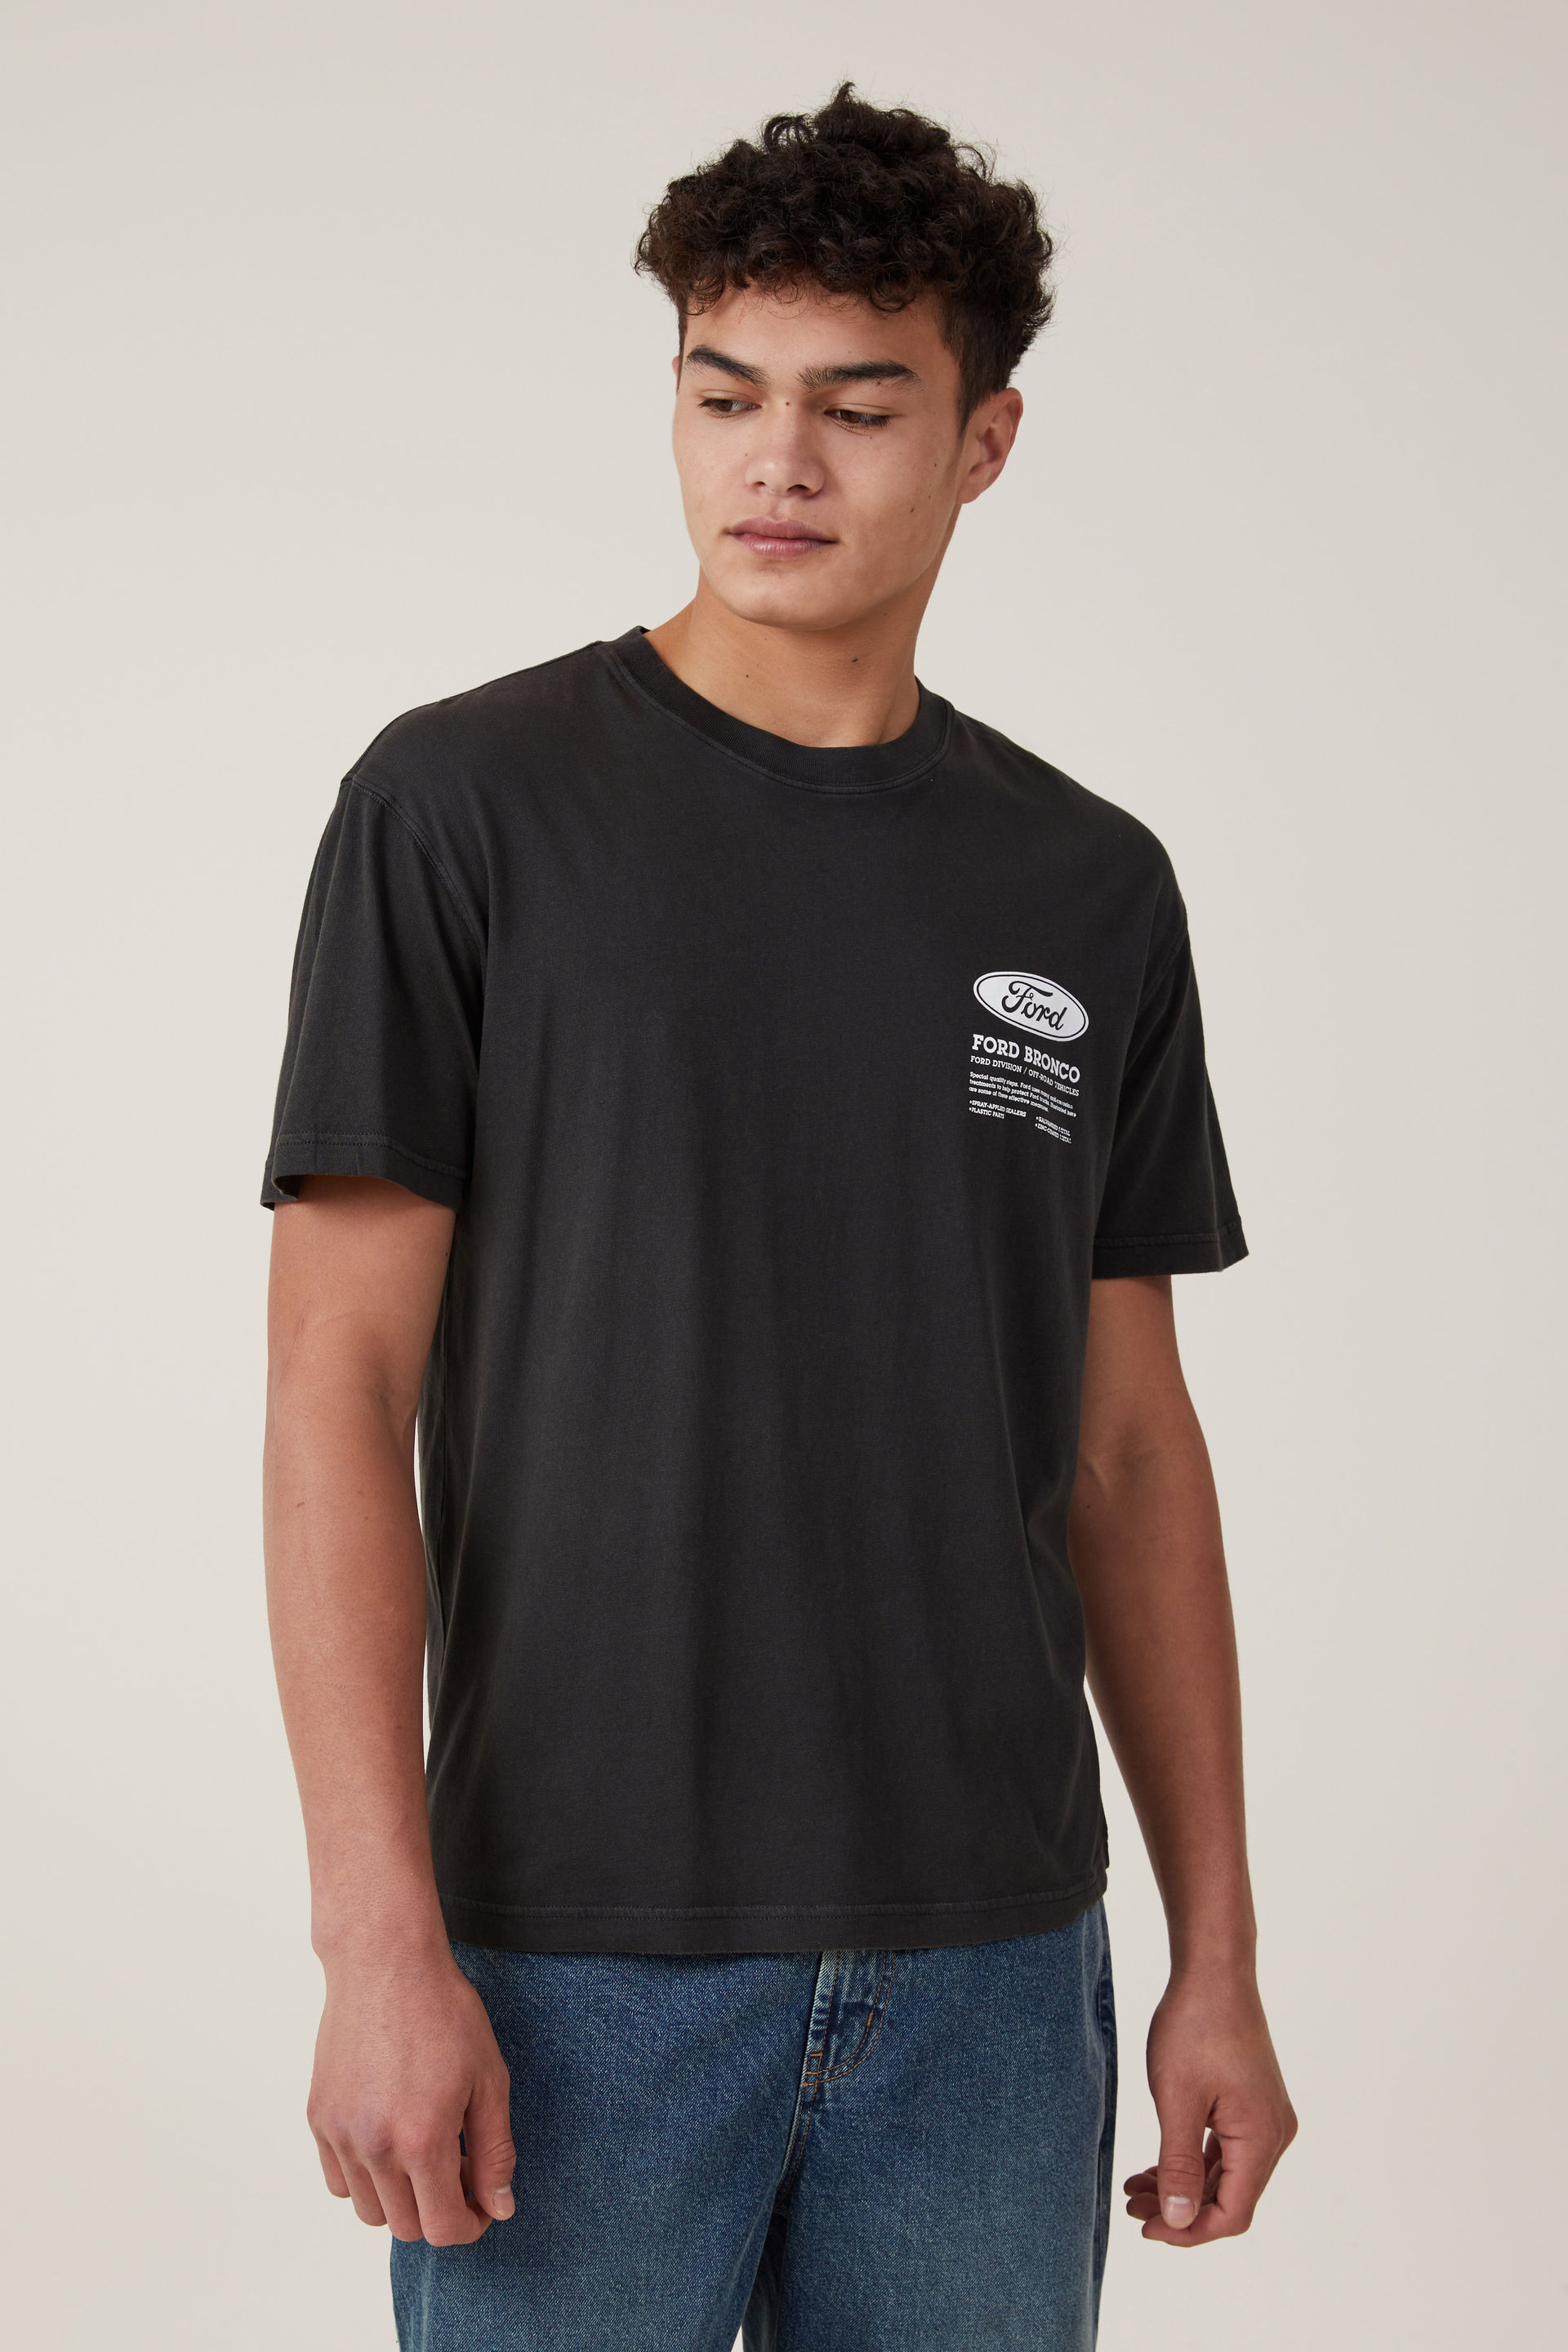 Cotton On Men - Ford Loose Fit T-Shirt - Lcn for washed black/bronco